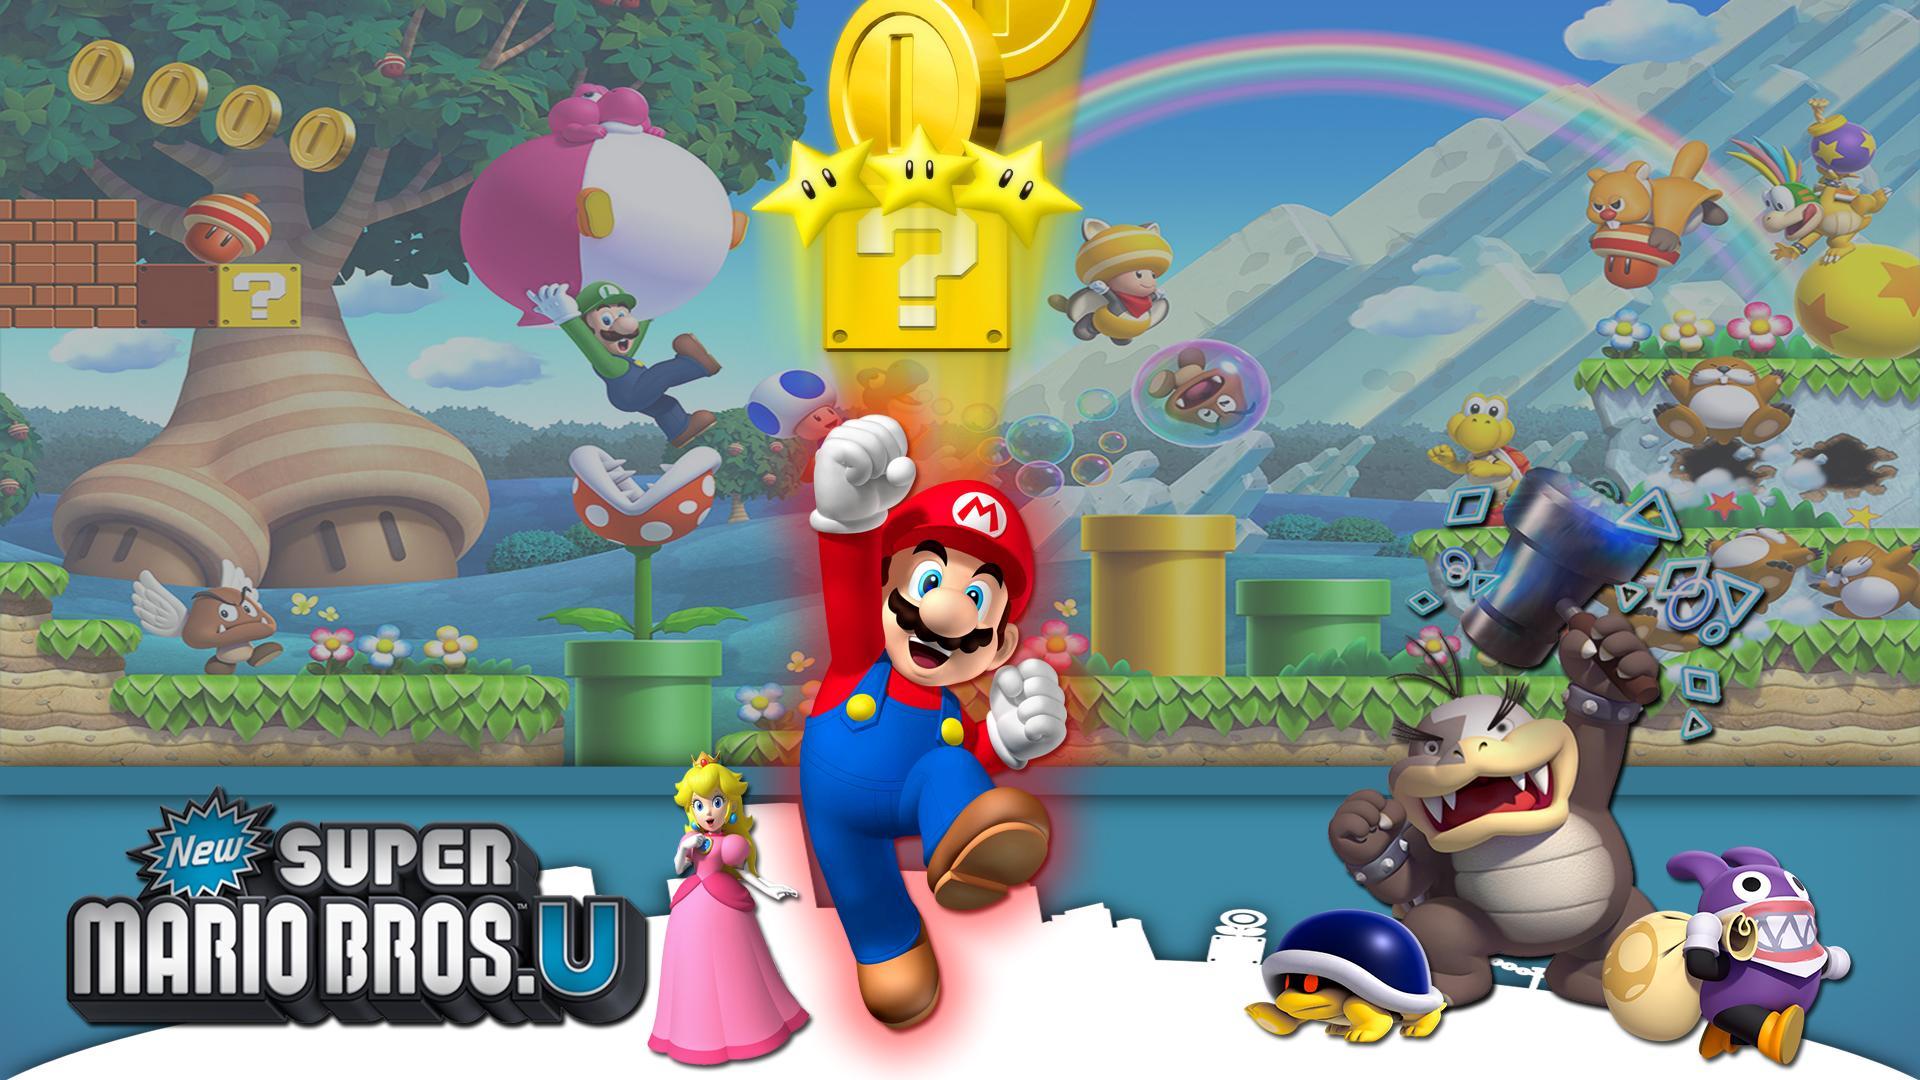 The New Super Mario Bros